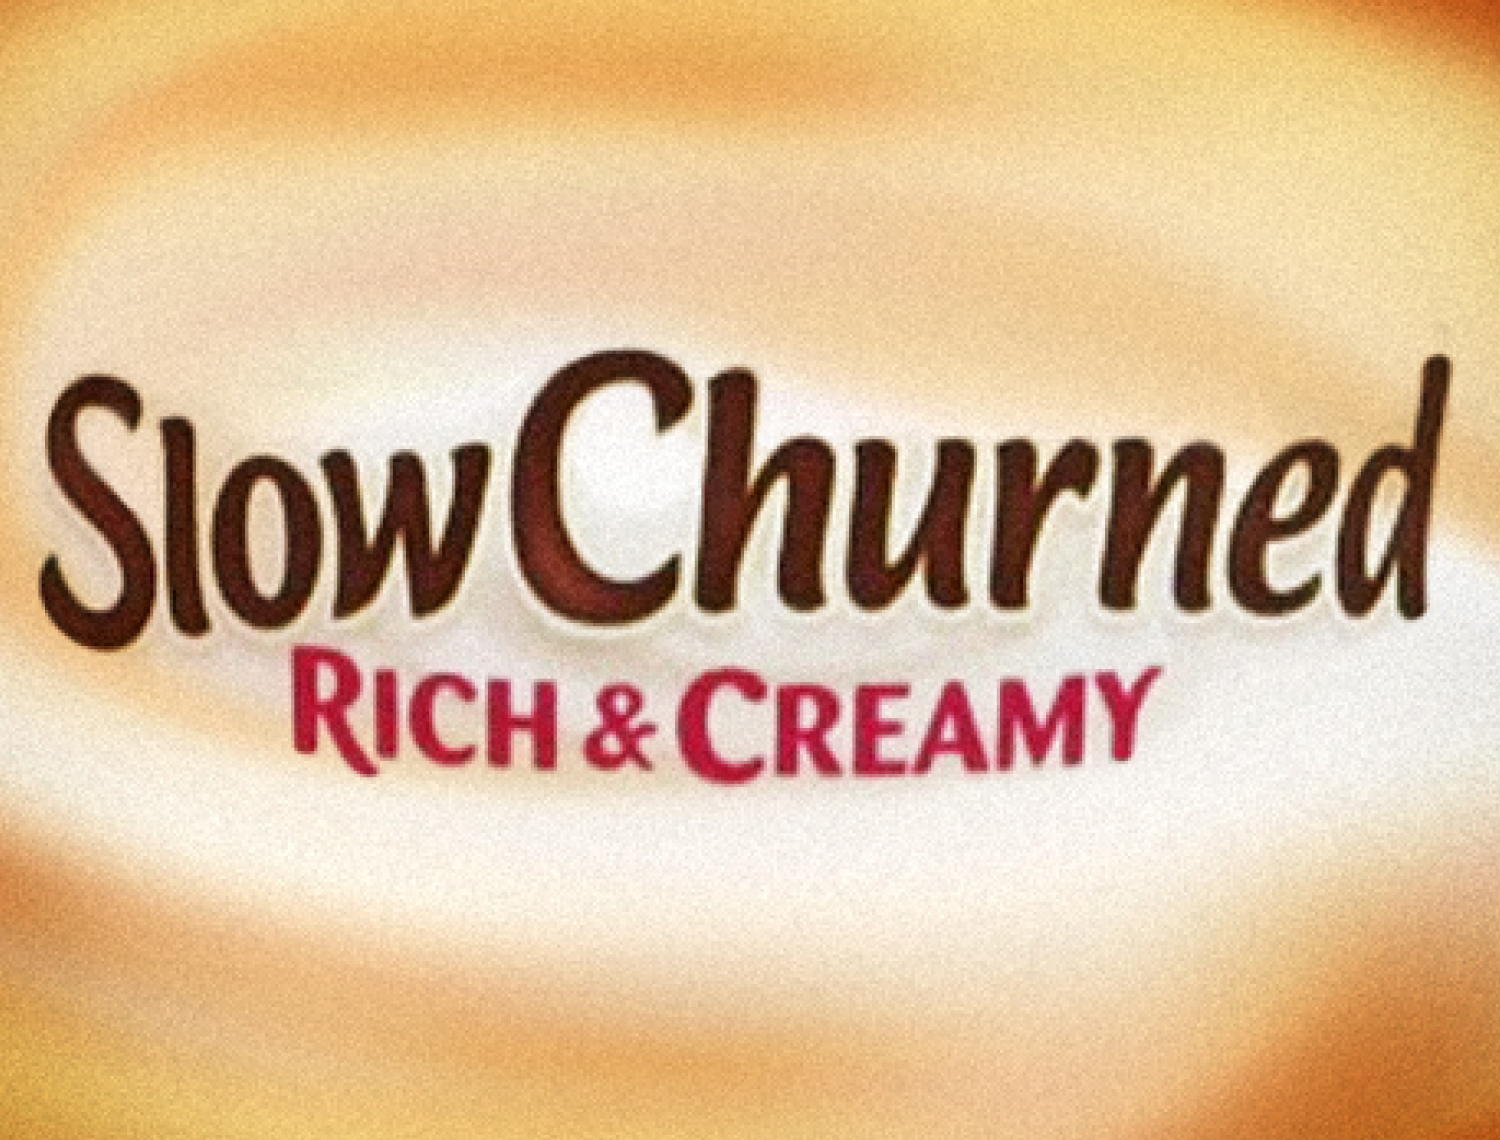 slow churned rich & creamy